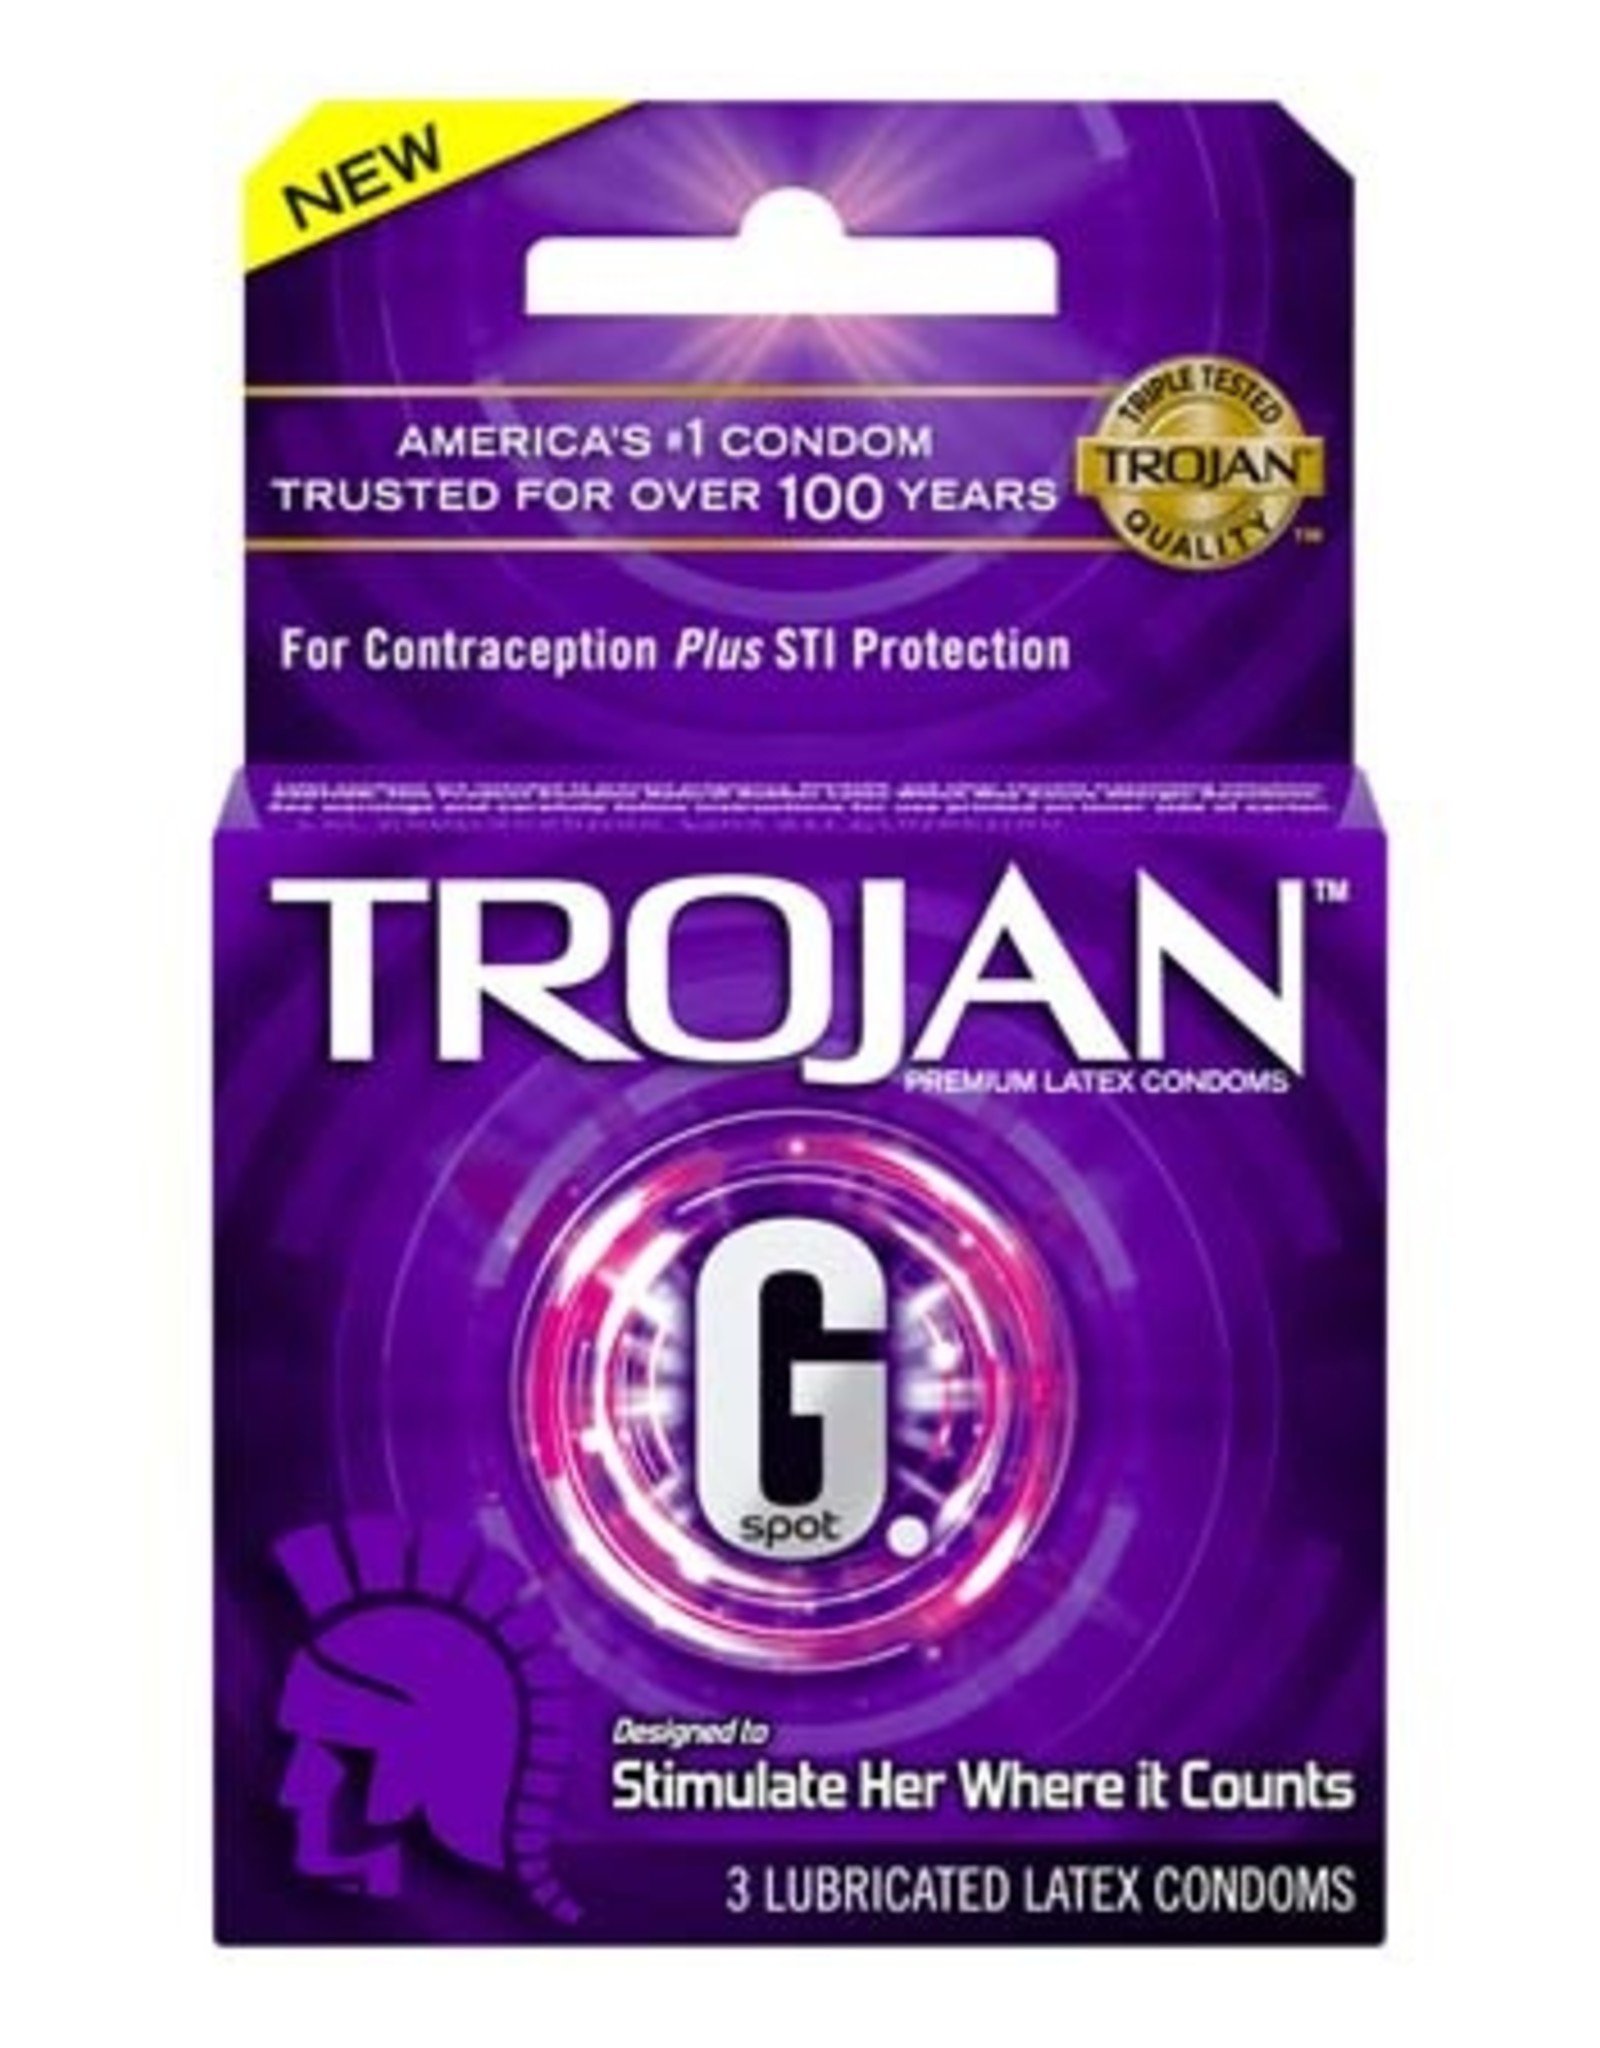 Trojan G Spot 3pk